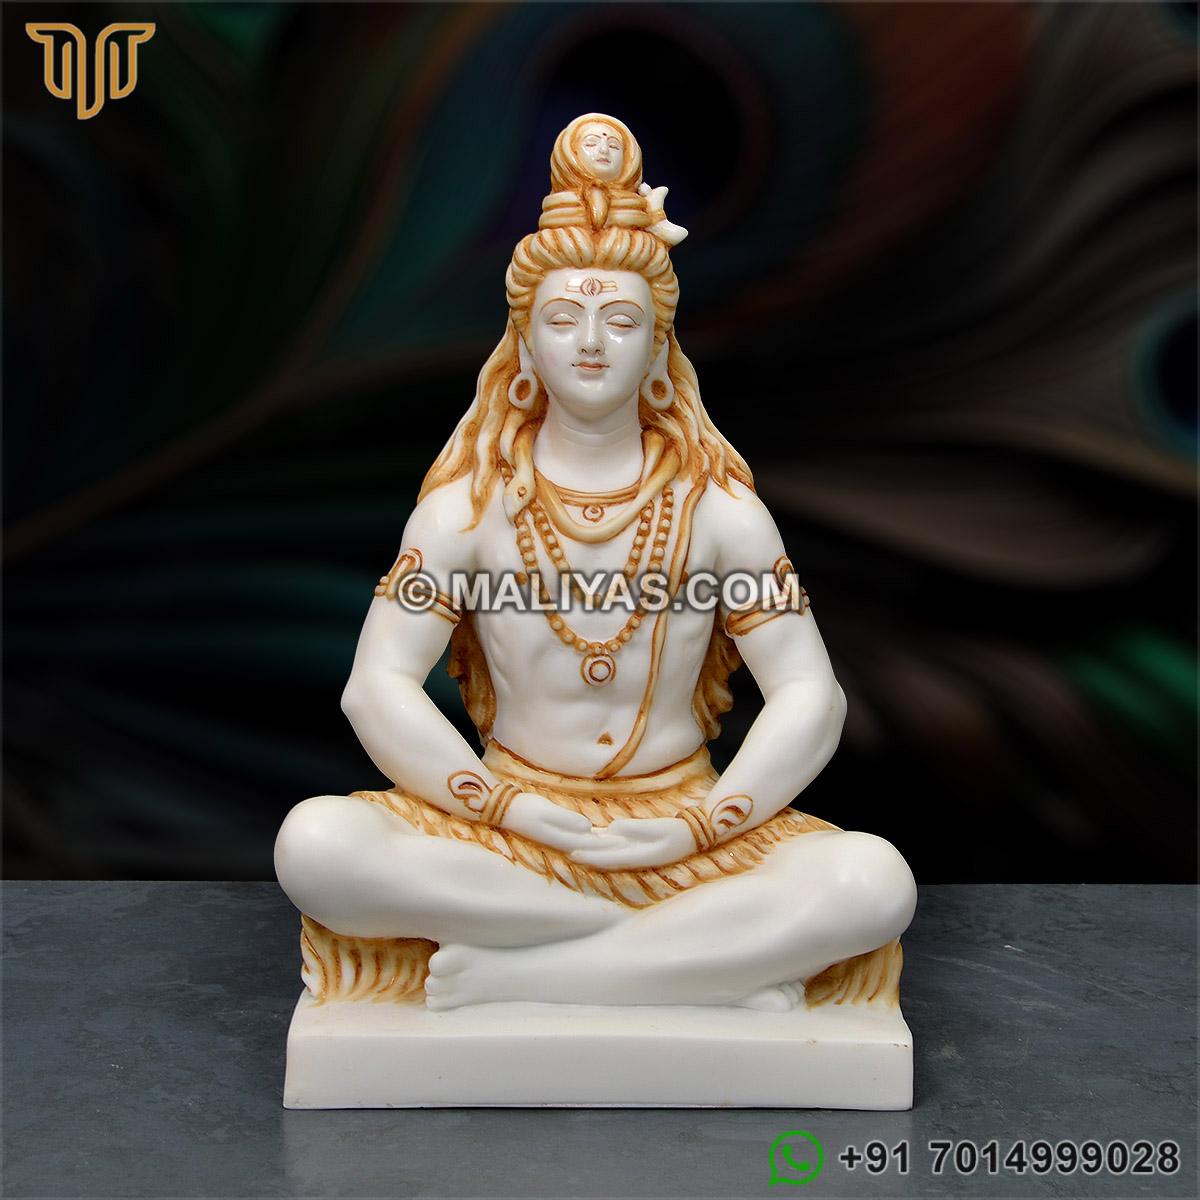 Marble dust Meditation Lord Shiva Statue